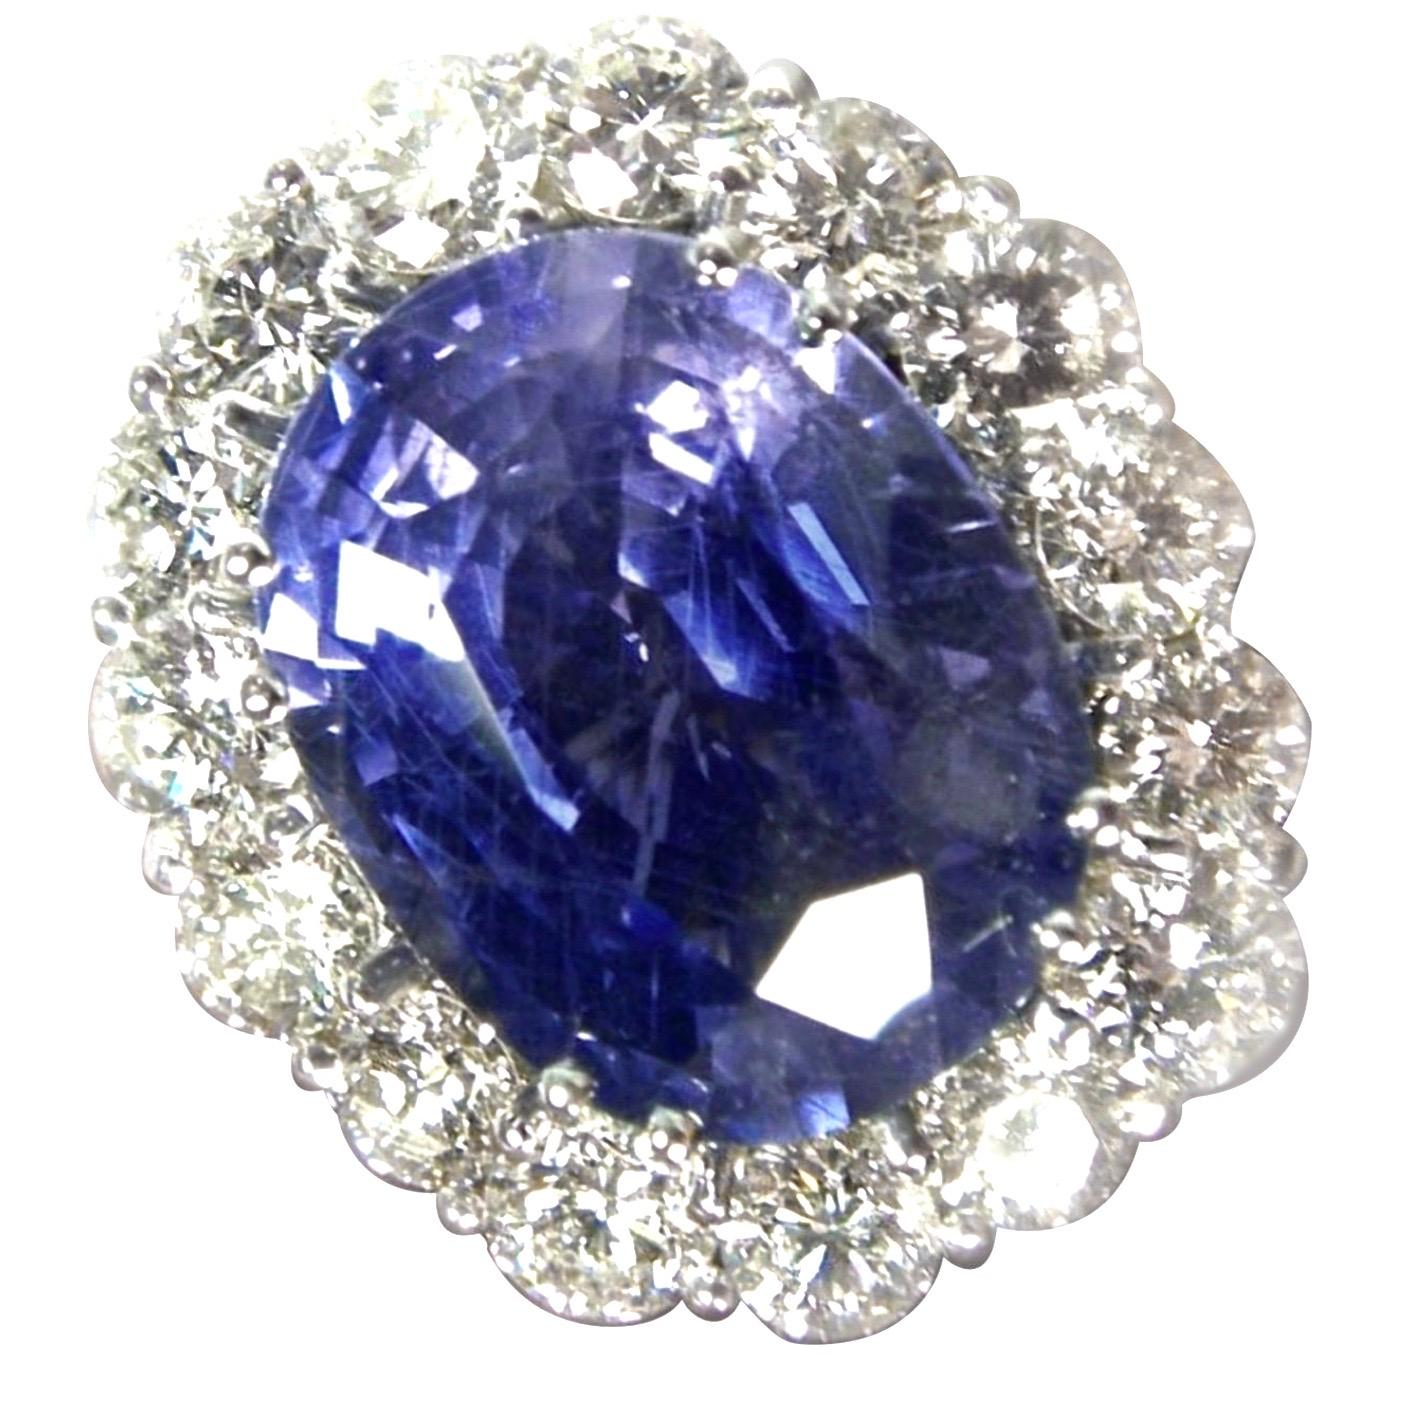 Saphir bleu de Ceylan non chauffé 13,12 carats, pierre précieuse non sertie, coussin certifié en vente 5